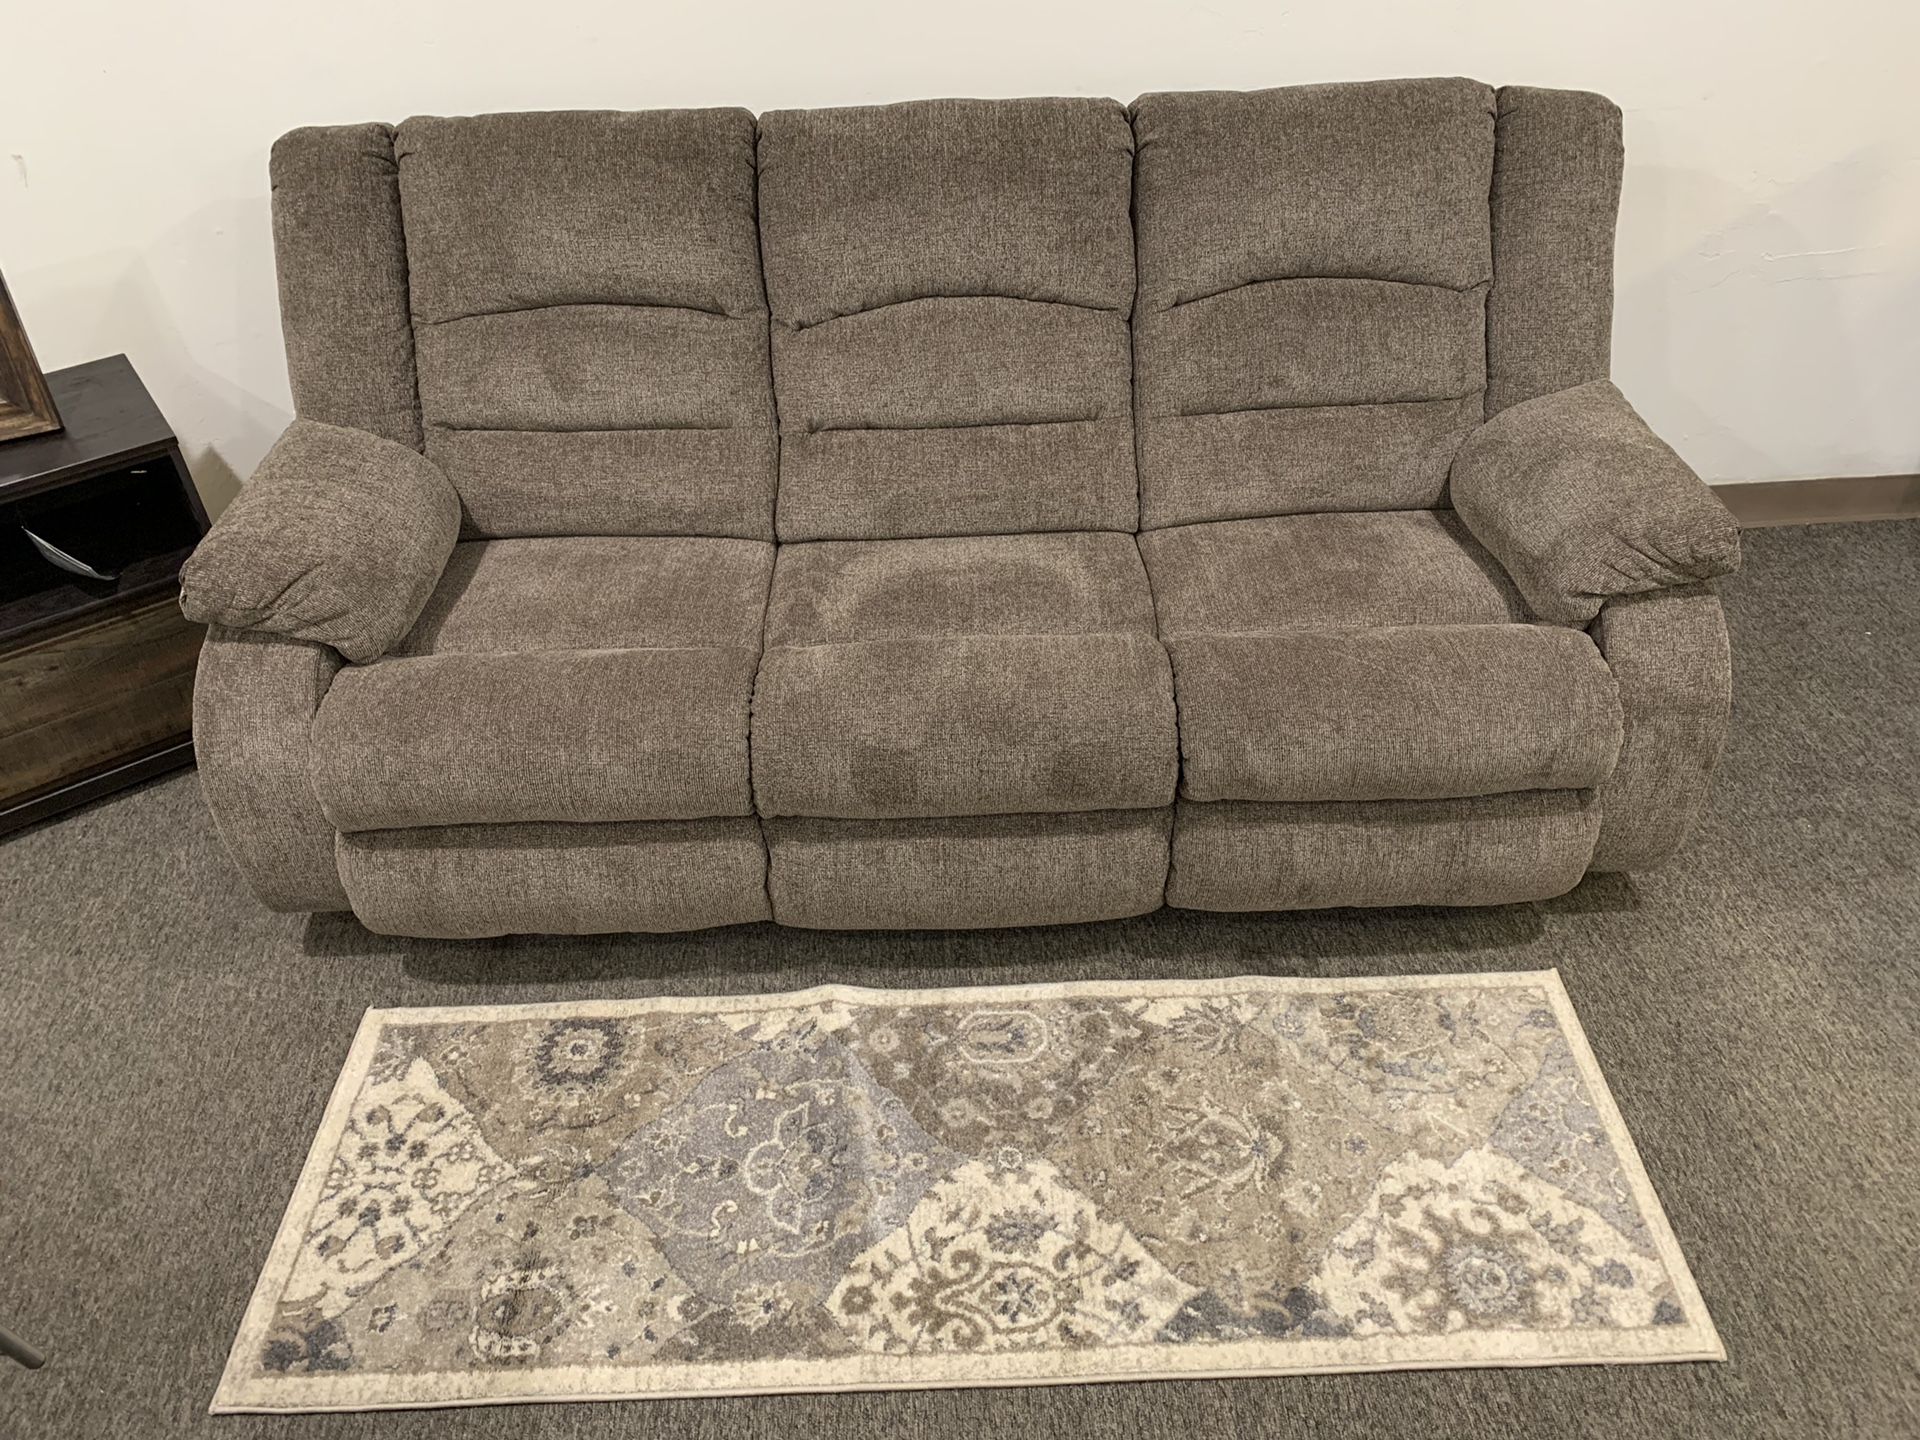 Brand NEW Ashley Recliner Sofa